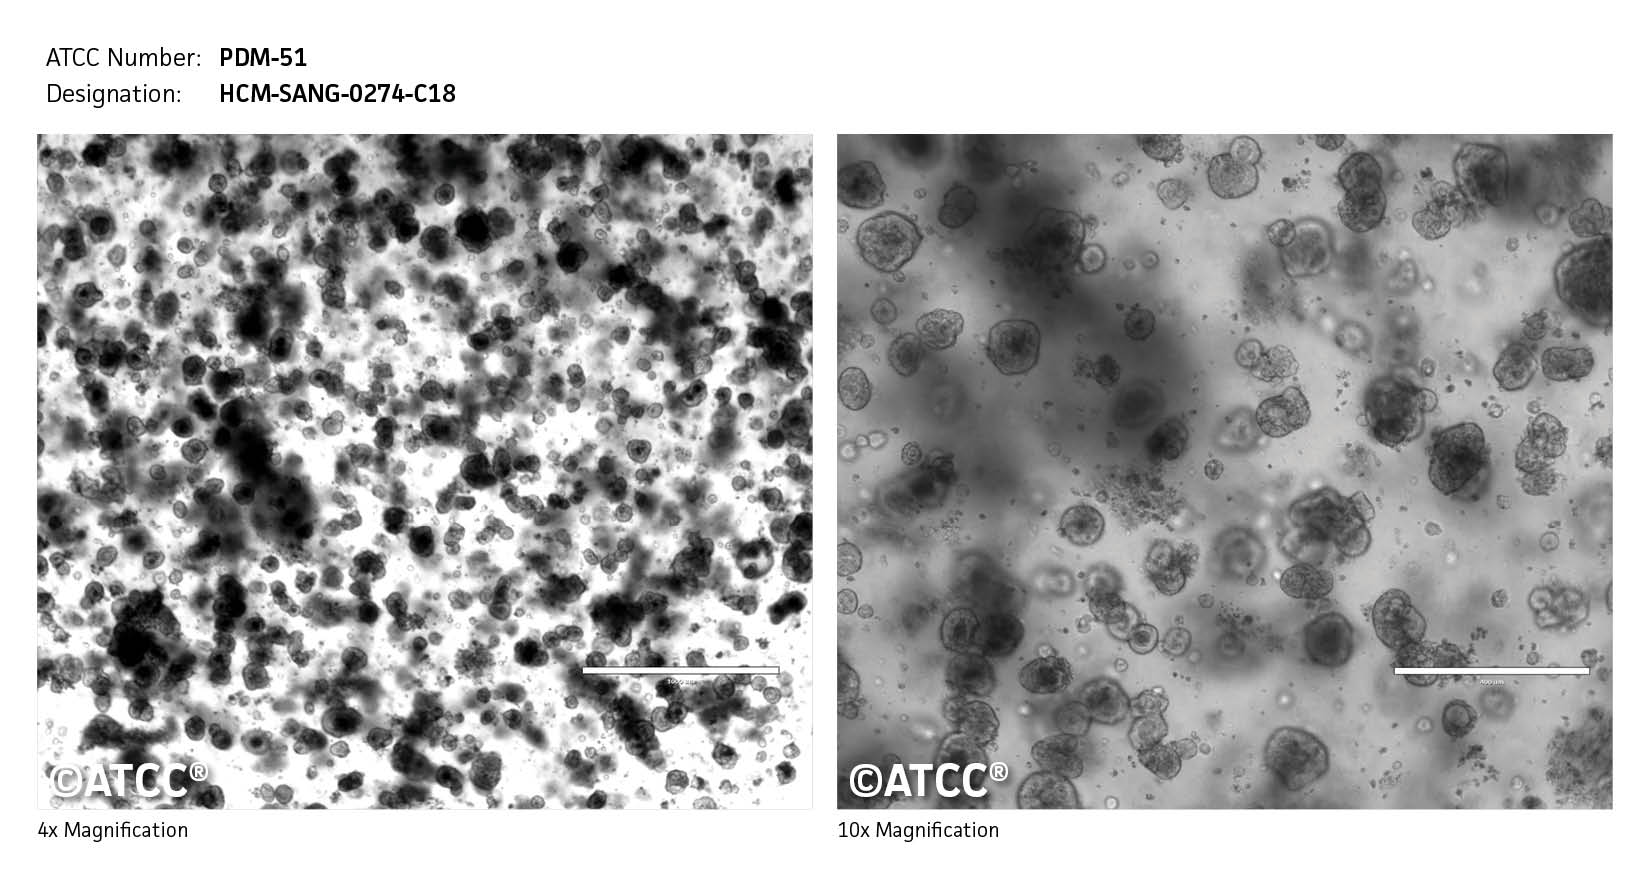 ATCC PDM-51 Cell Micrograph